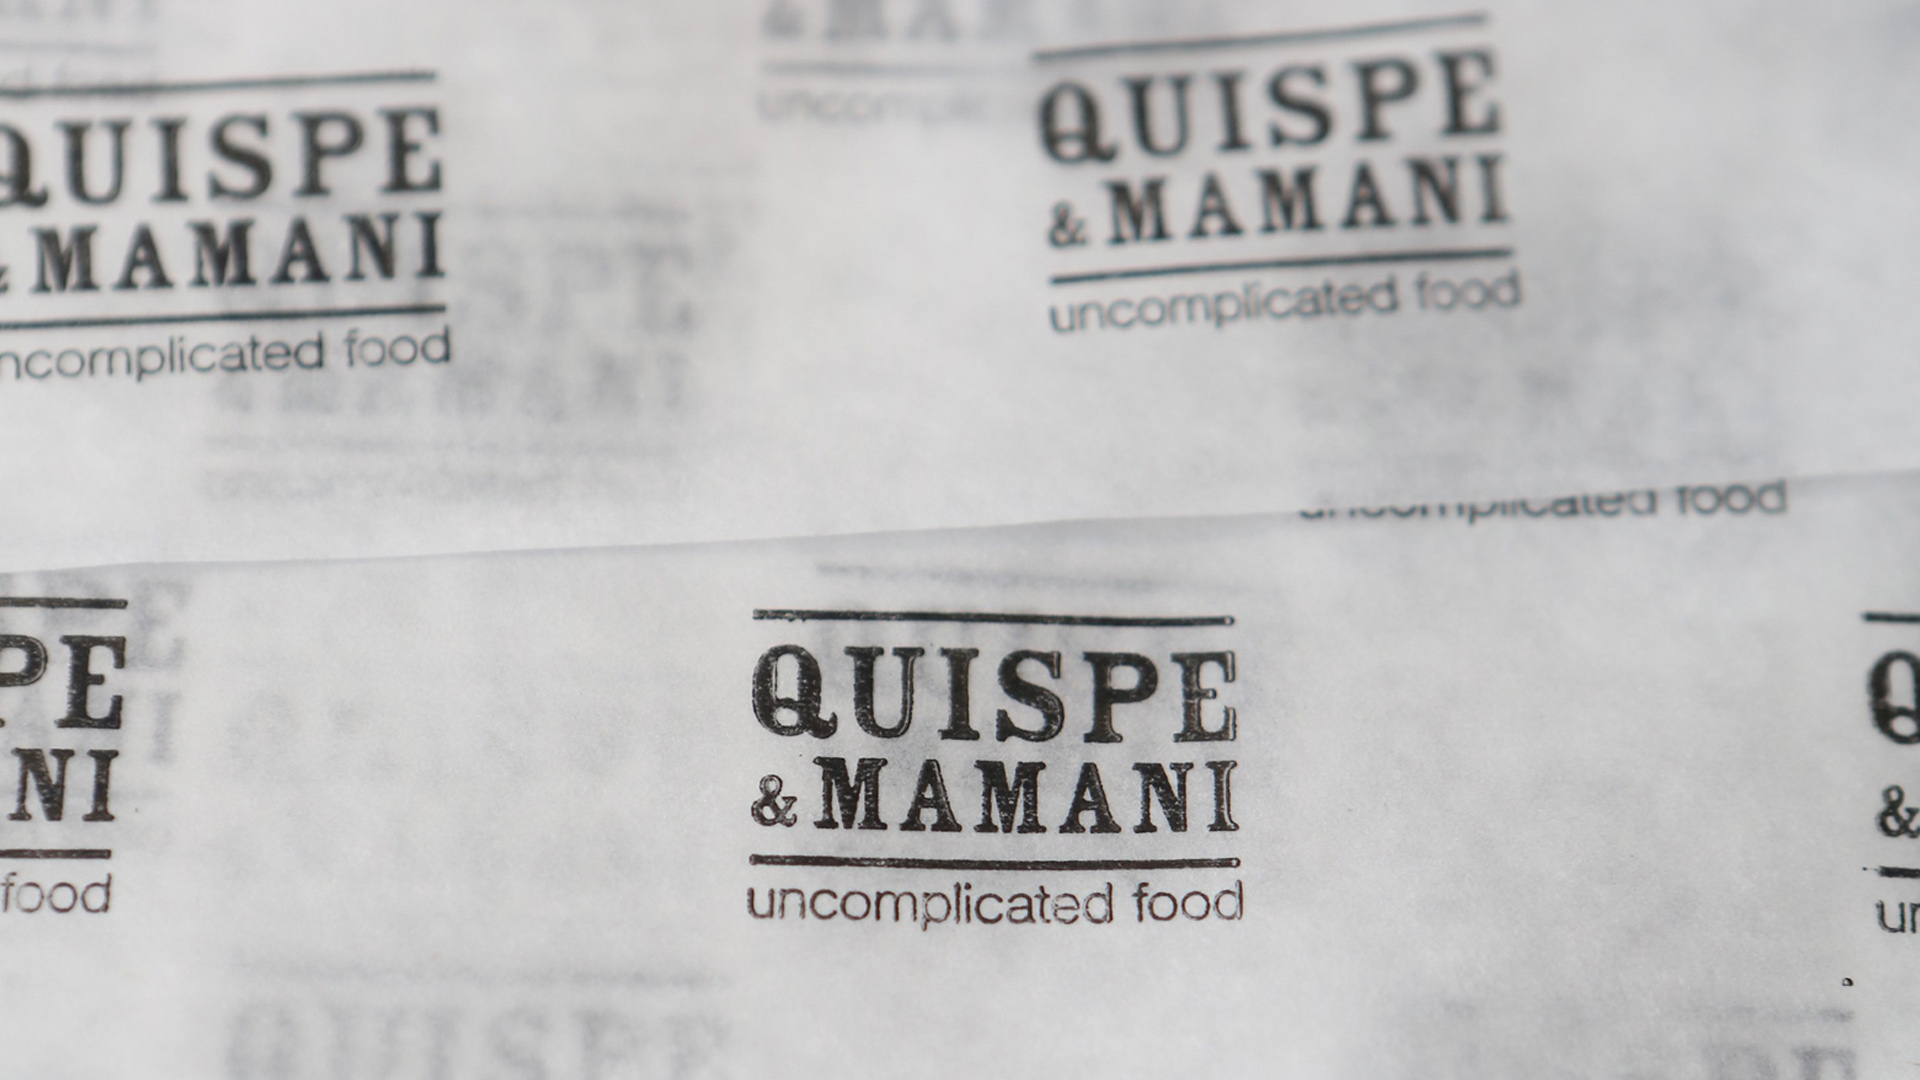 Quispe & Mamani uncomplicated food brand.